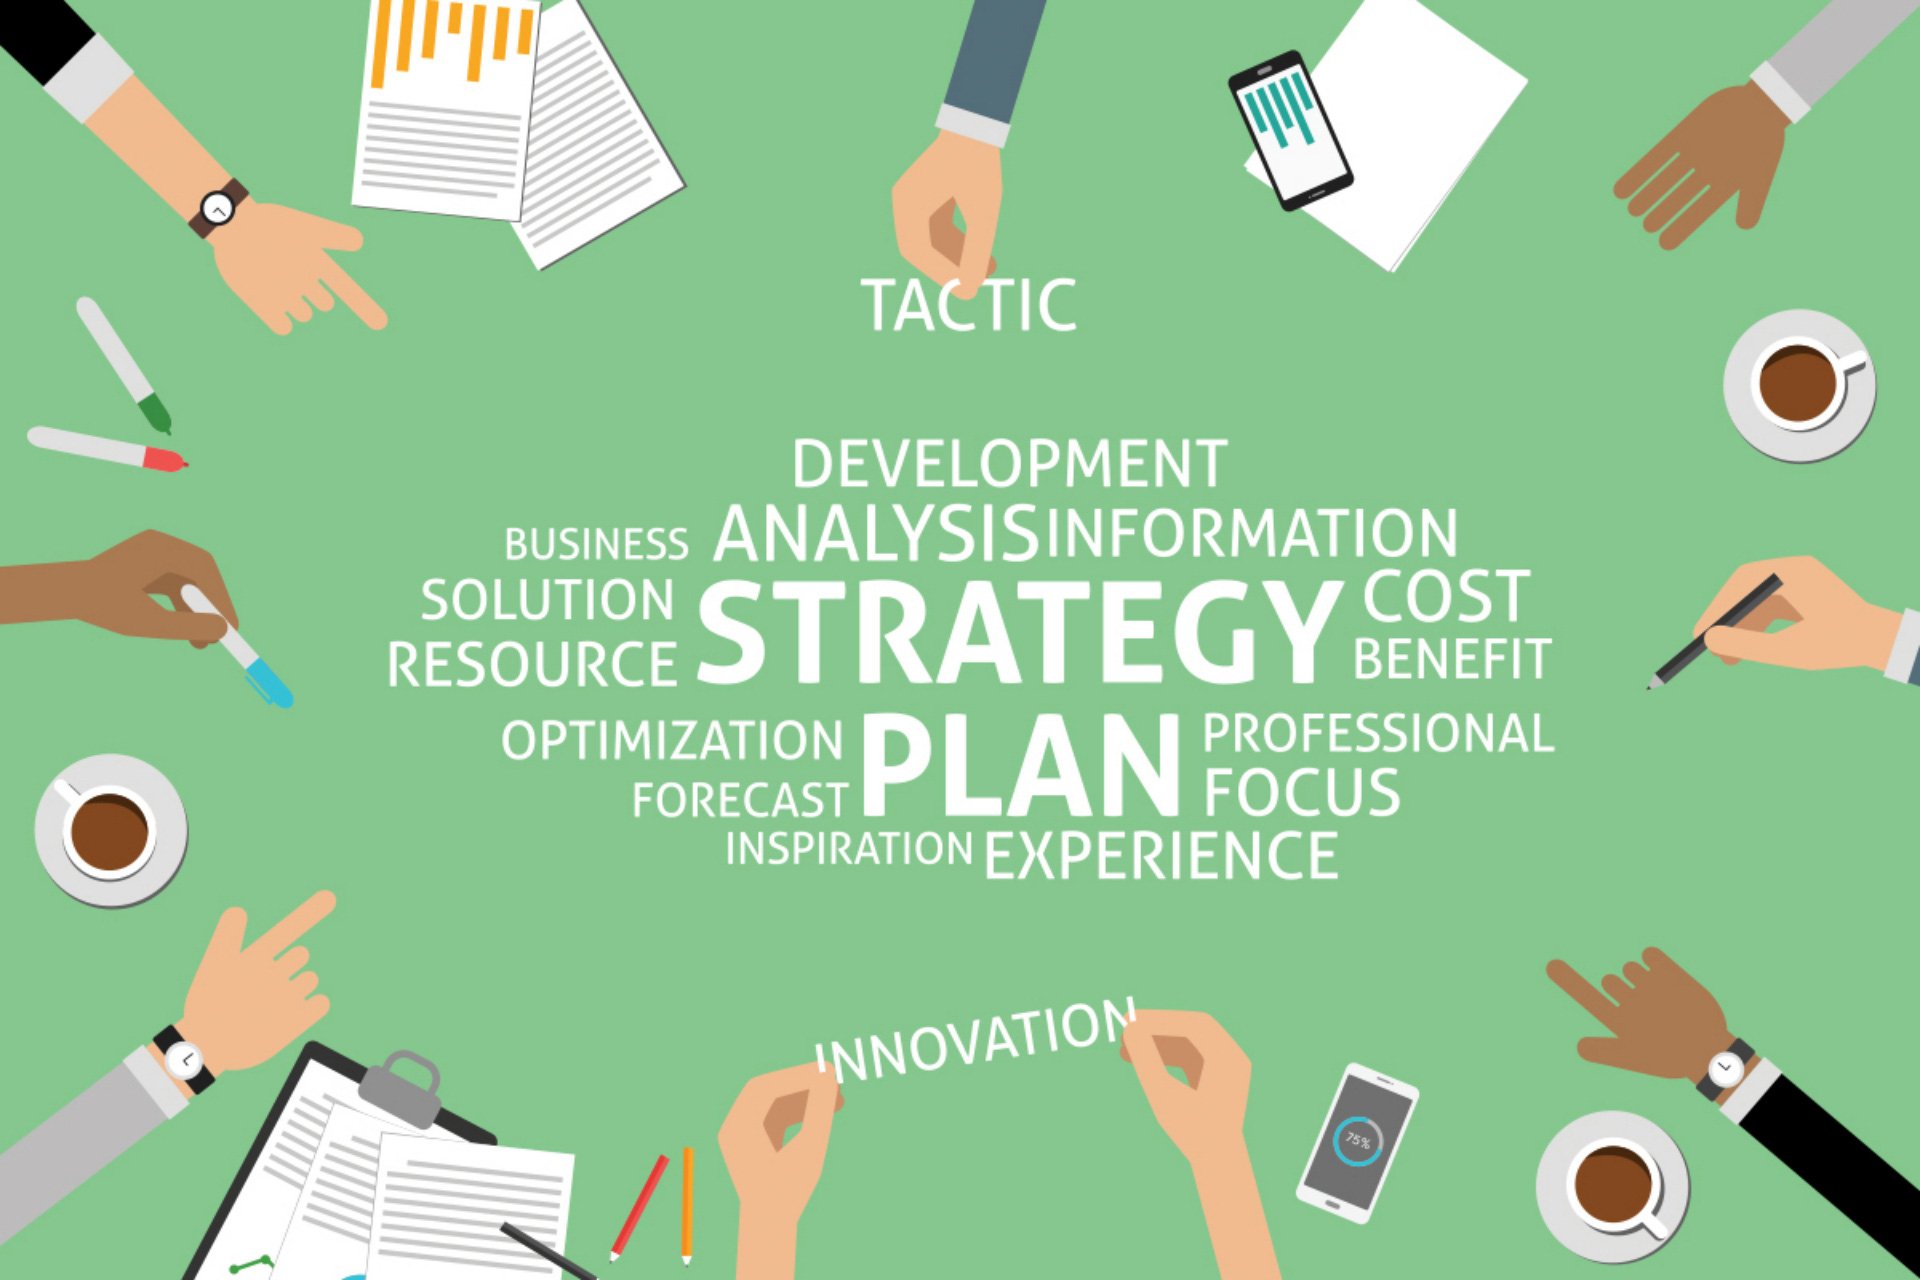 strategic benefit plan